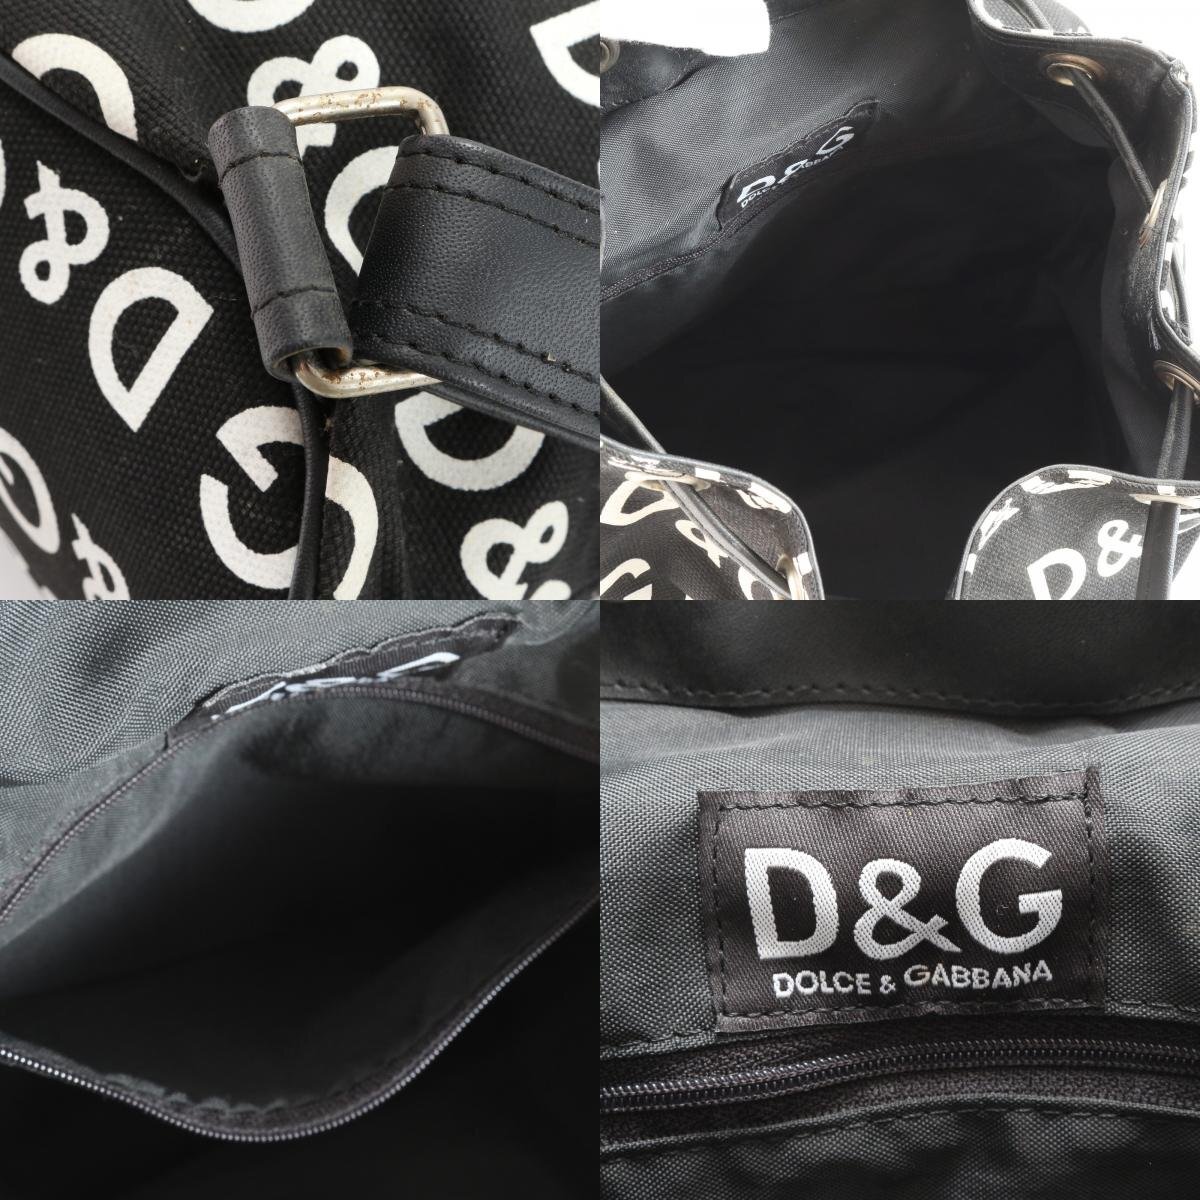 1 jpy #ti- and ji-# Logo D&G Dolce&Gabbana Dolce and Gabbana rucksack rucksack backpack shoulder HHY Q10-4